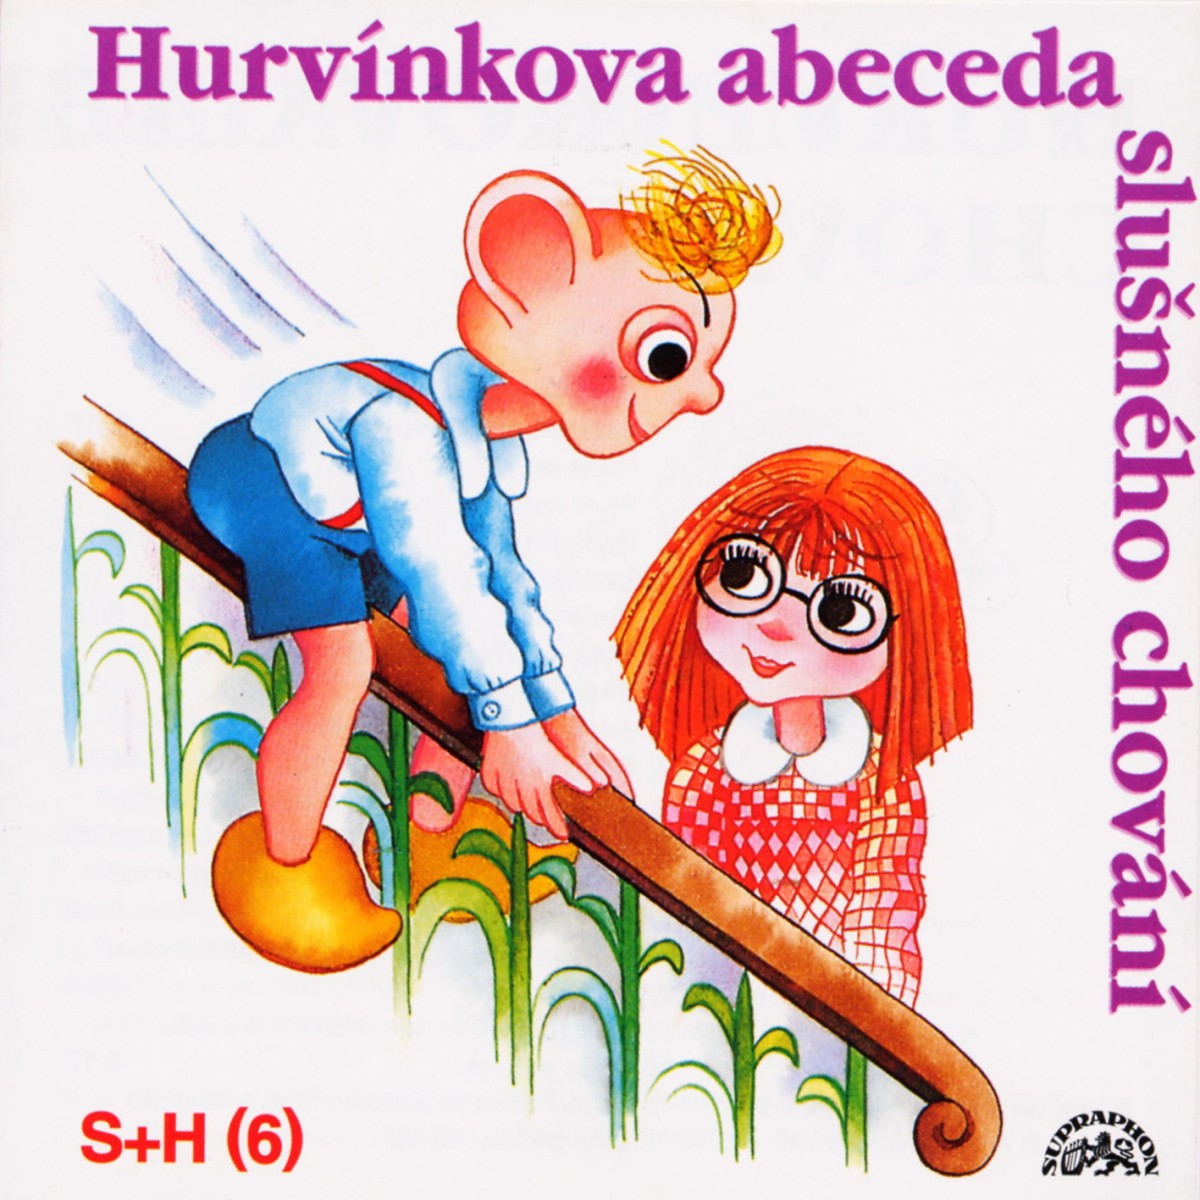 Spejbl a Hurvinek : Hurvinkova abeceda slusneho chovani CD